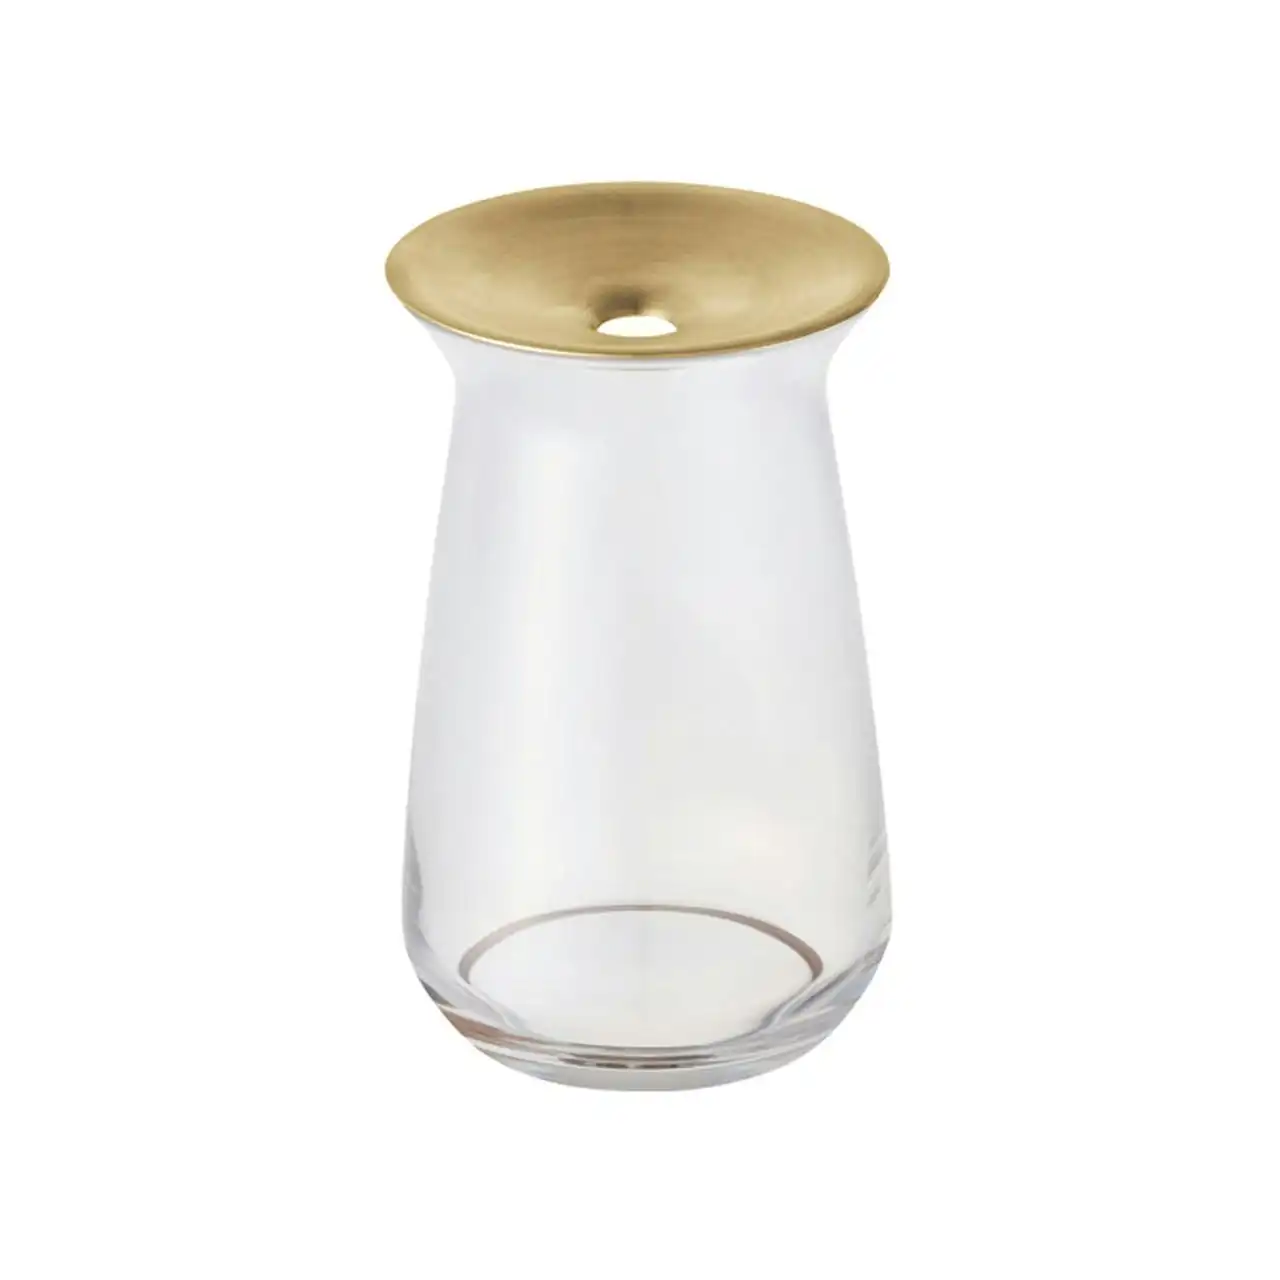 Kinto Luna Glass 13cm Flower Vase Container w/ Brass Lid Large Home Decor Clear